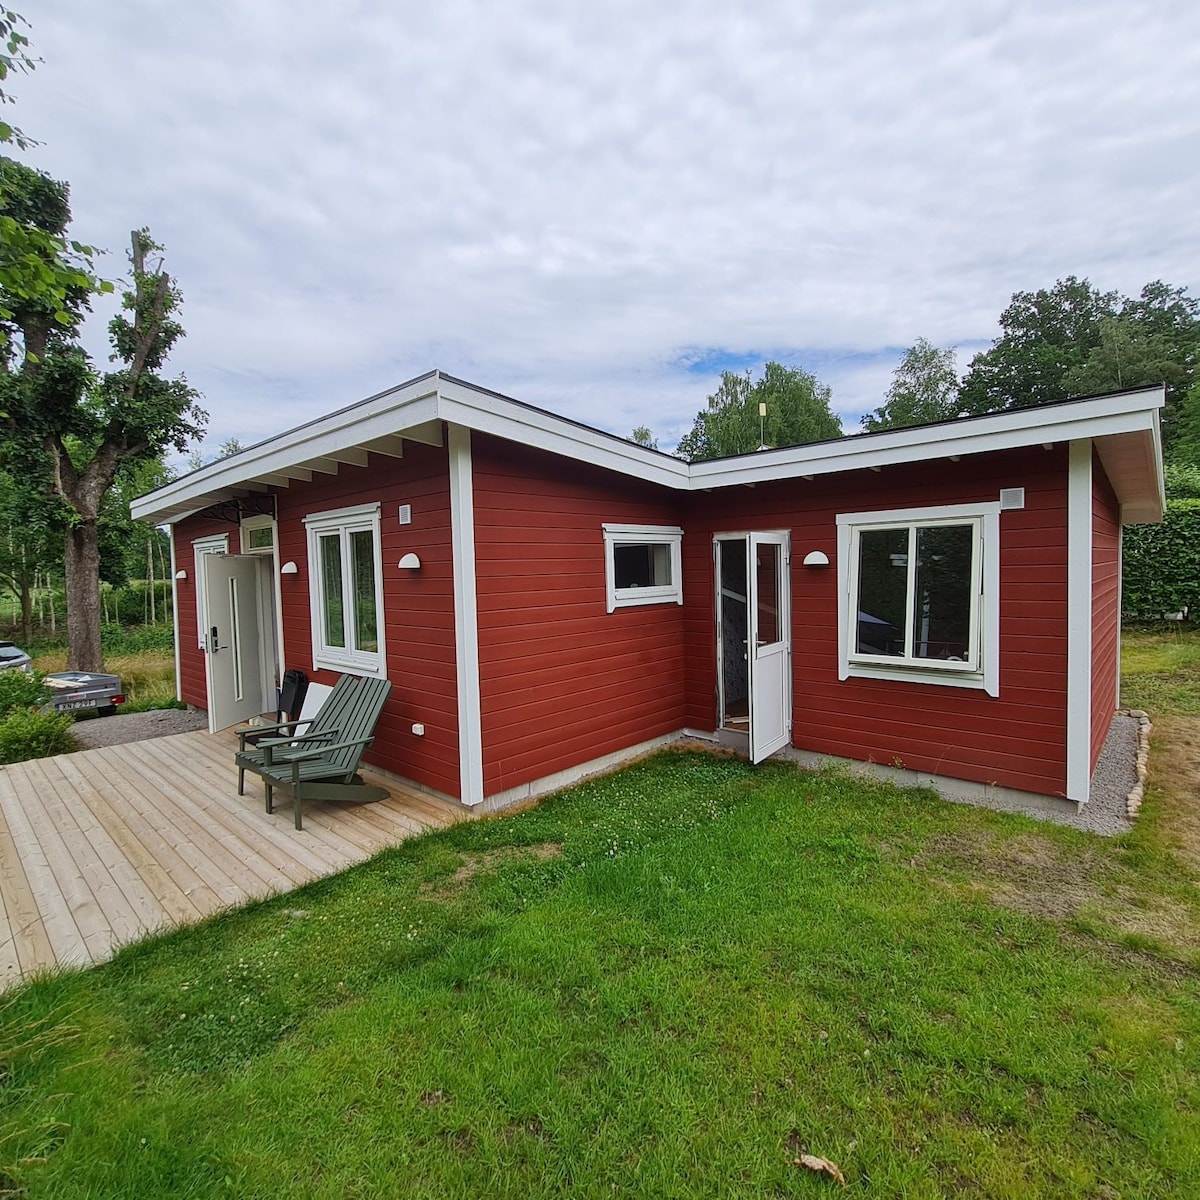 Moheda Vacation Rentals & Homes - Kronoberg County, Sweden | Airbnb